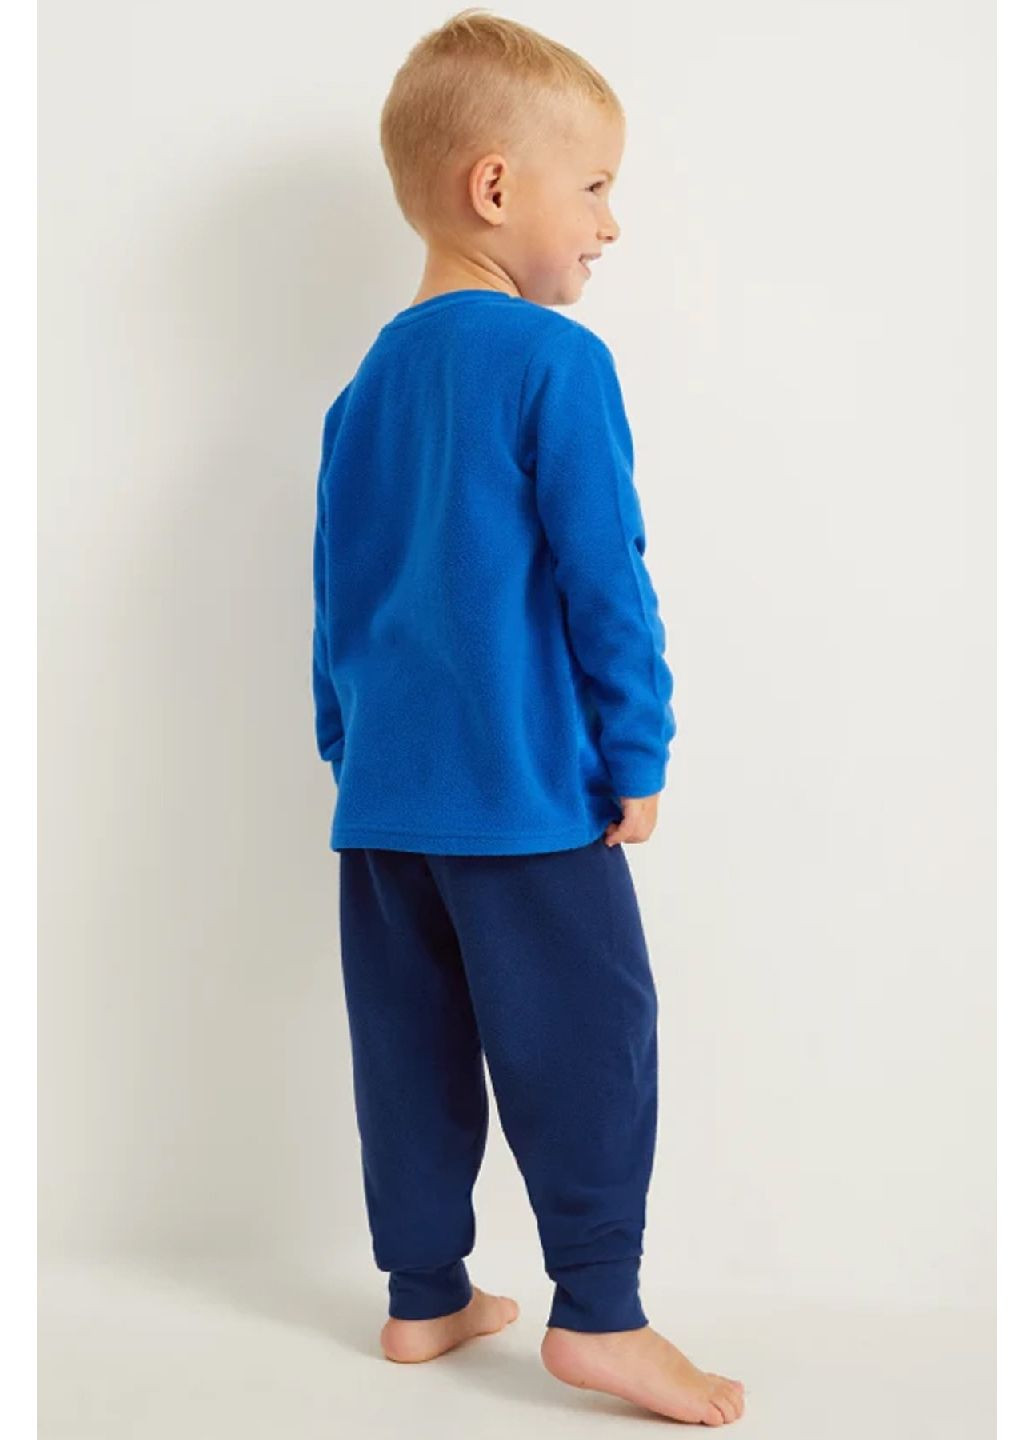 Синяя зимняя флисовая пижама (свитшот, брюки) свитшот + брюки C&A